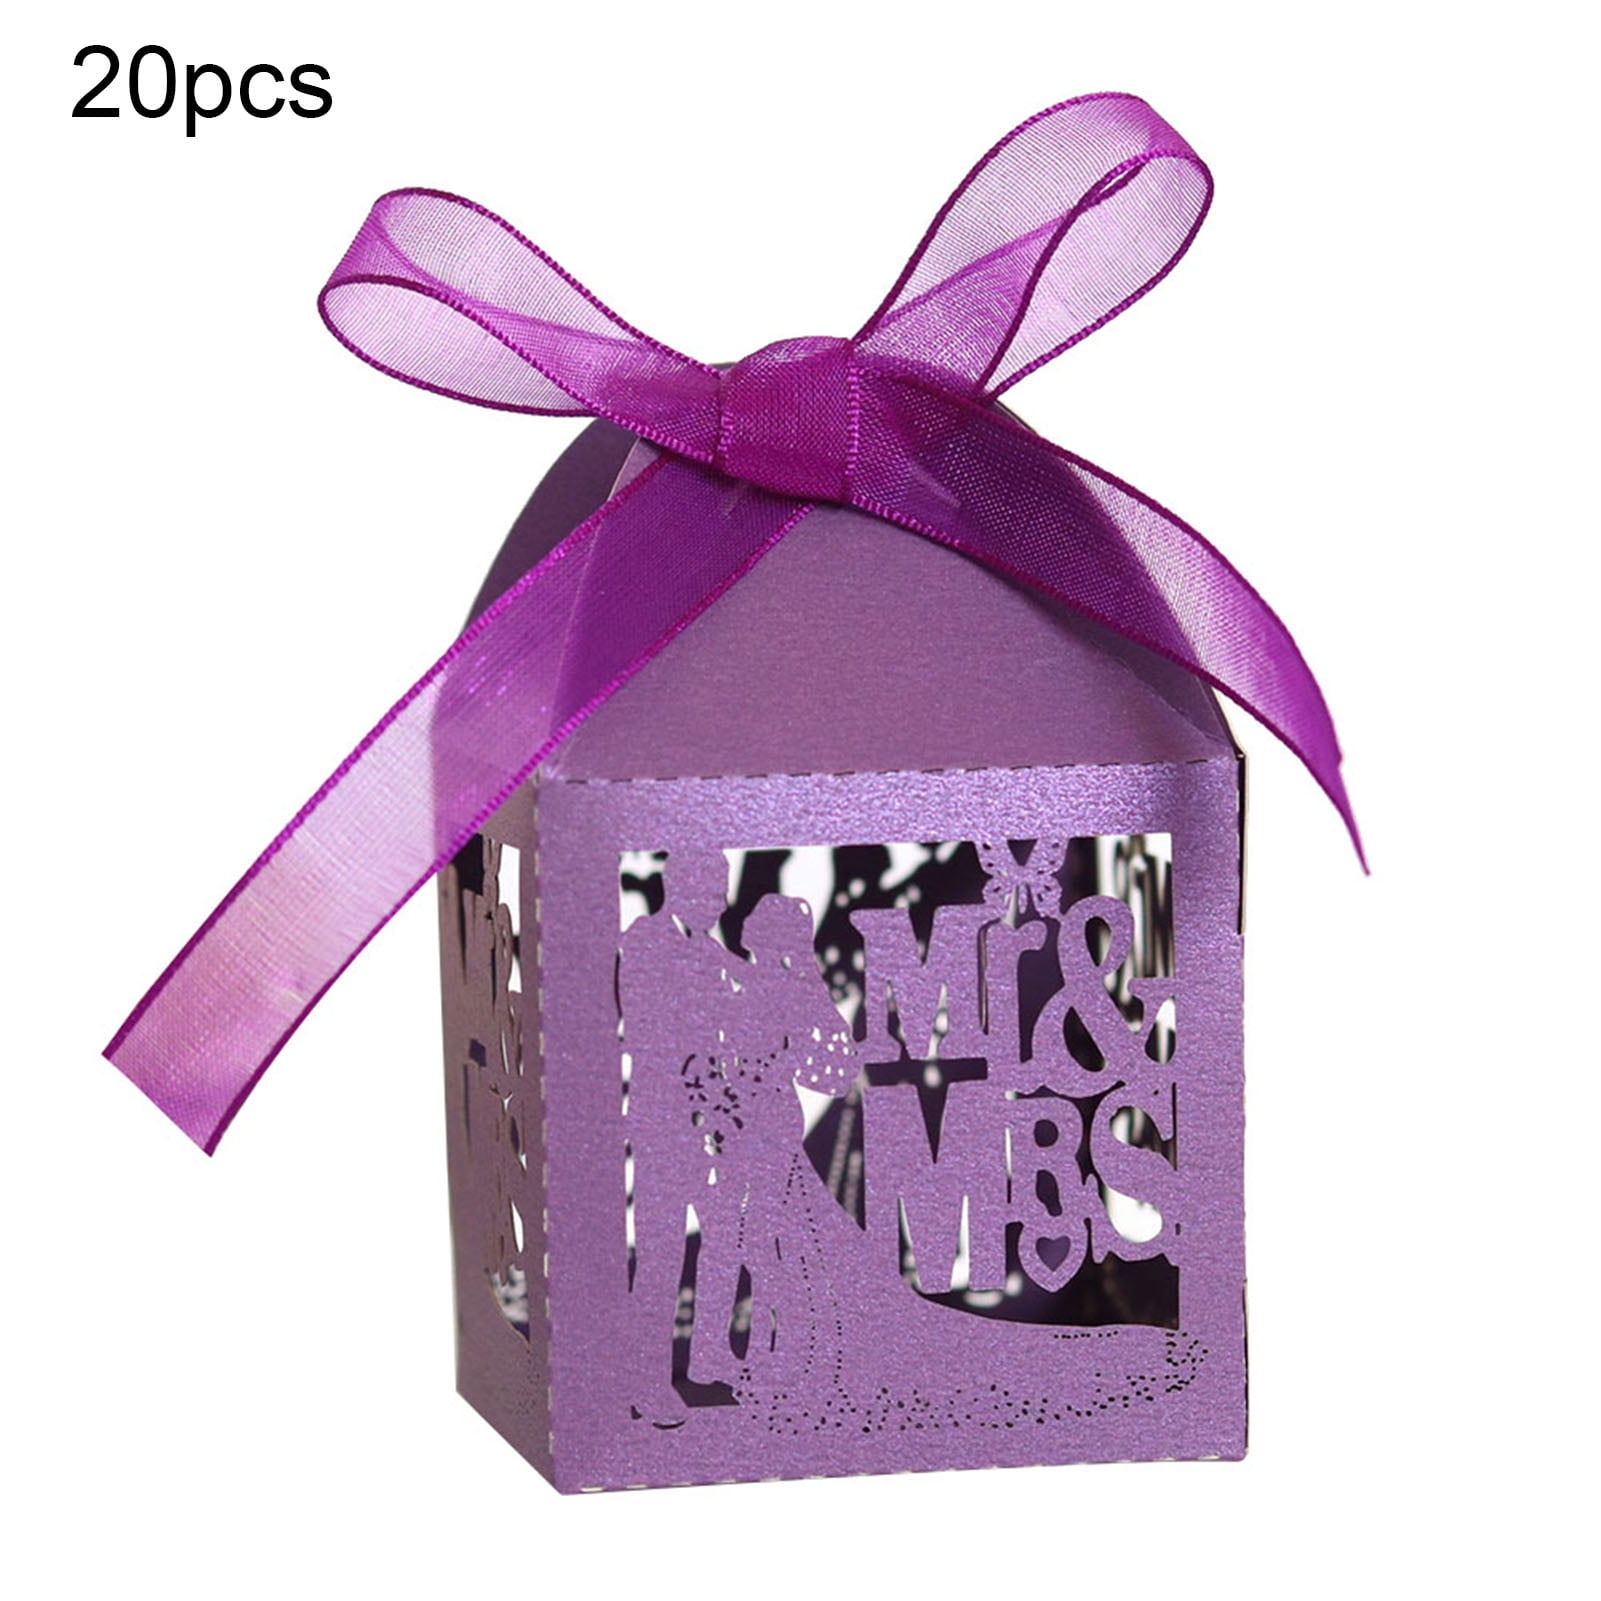 20x Heart Paper Cut Candy Sweet Box Ribbon Wedding Party Favor Gift Purple 